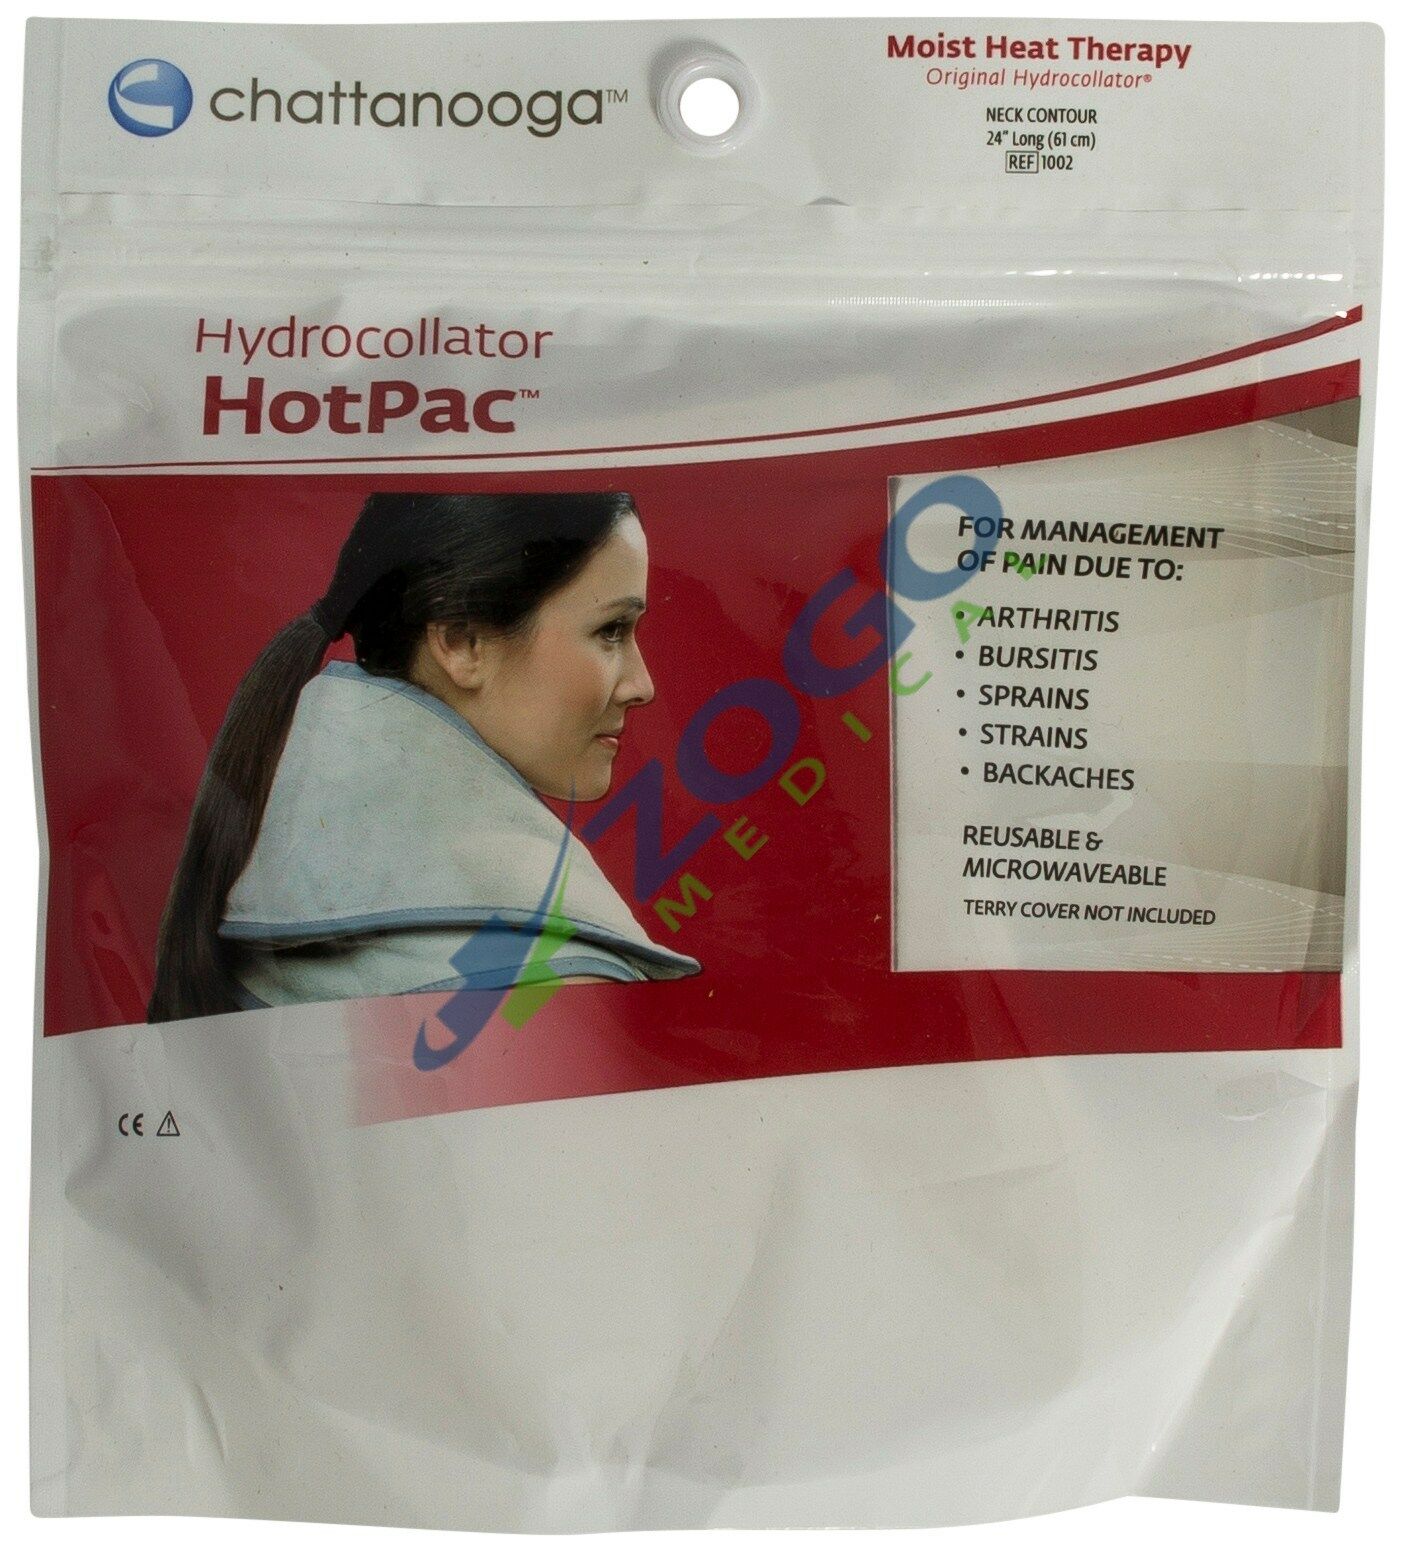 Brand New Chattanooga Hotpac Hydrocollator Moist Heat Hot Pack - All Sizes